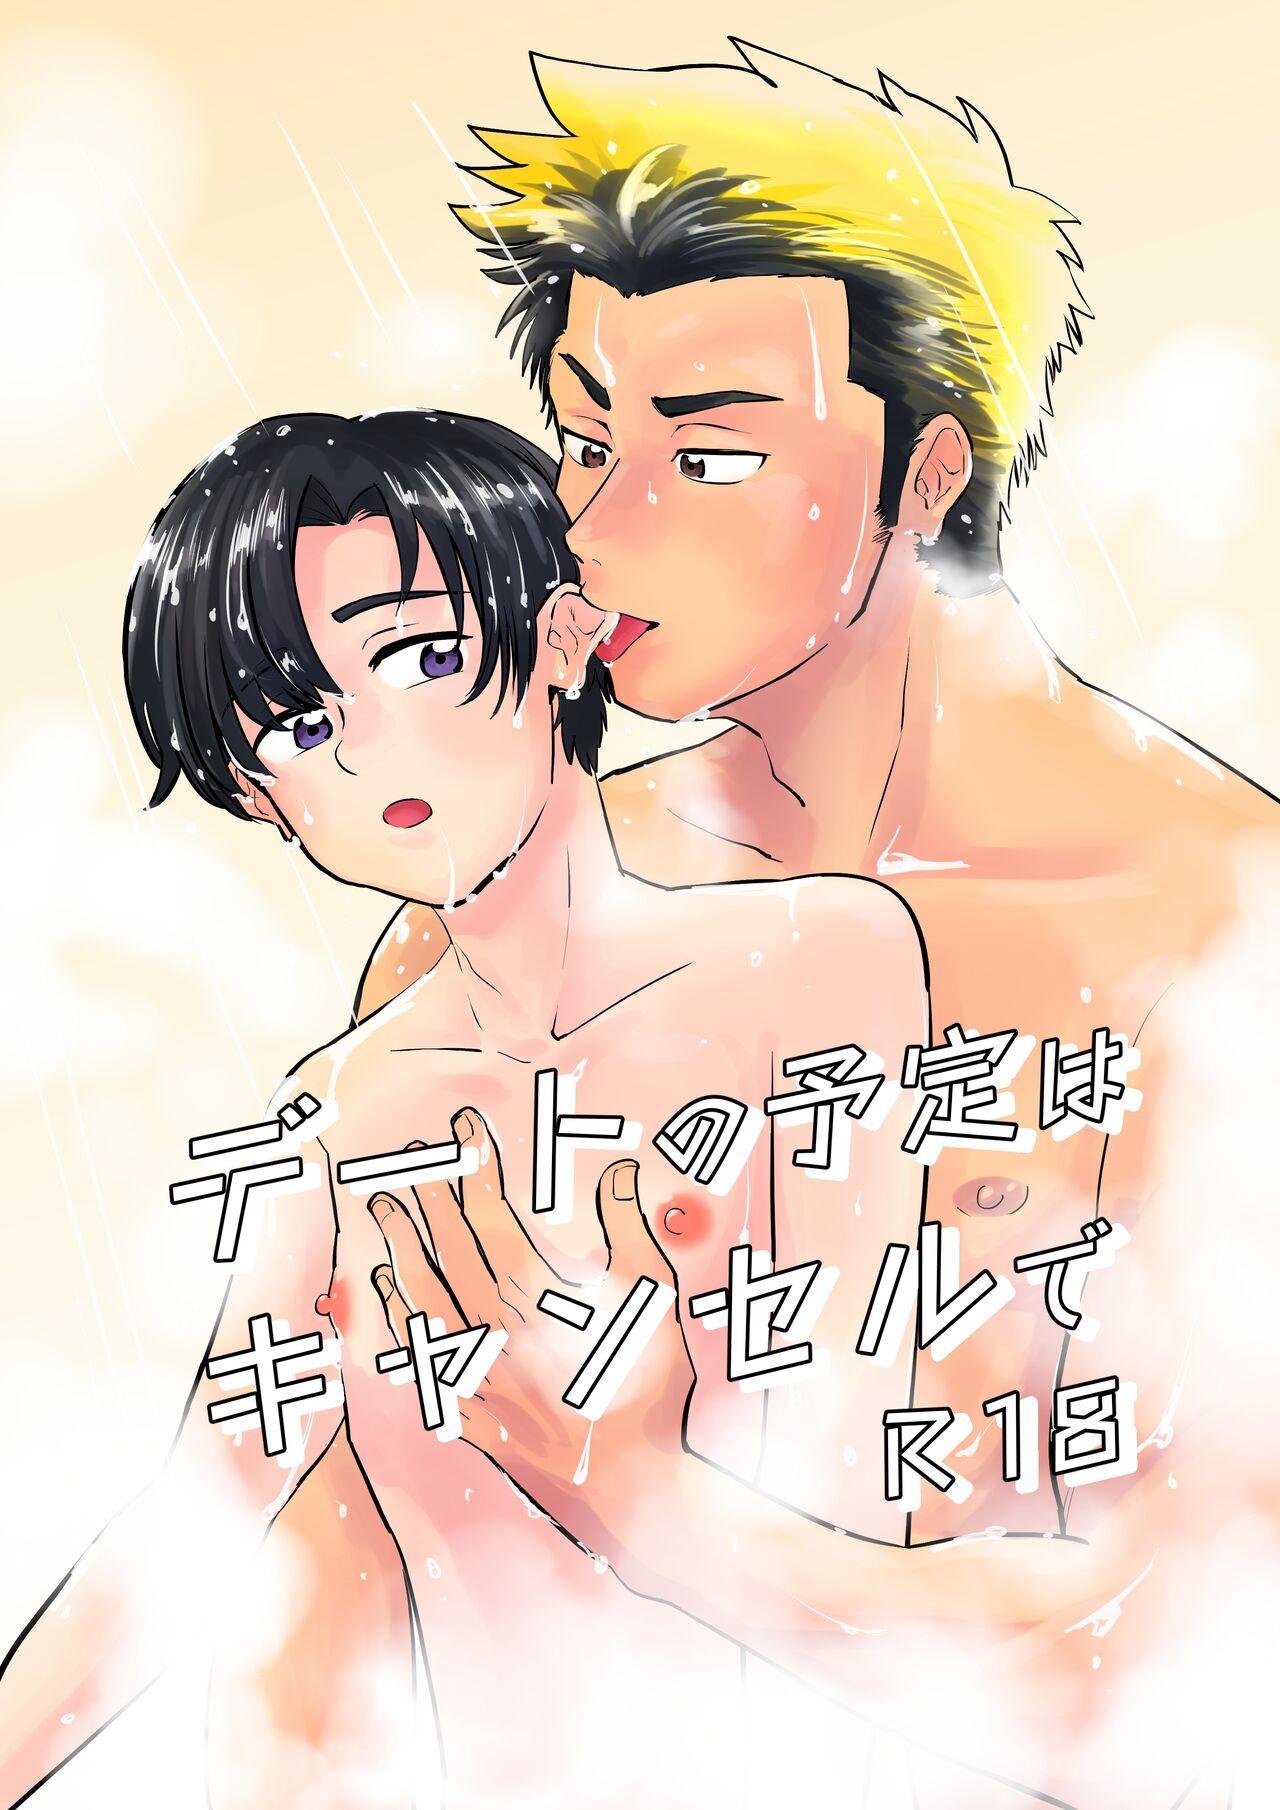 Soapy Date no Yotei wa Cancel de - Original Submission - Page 1